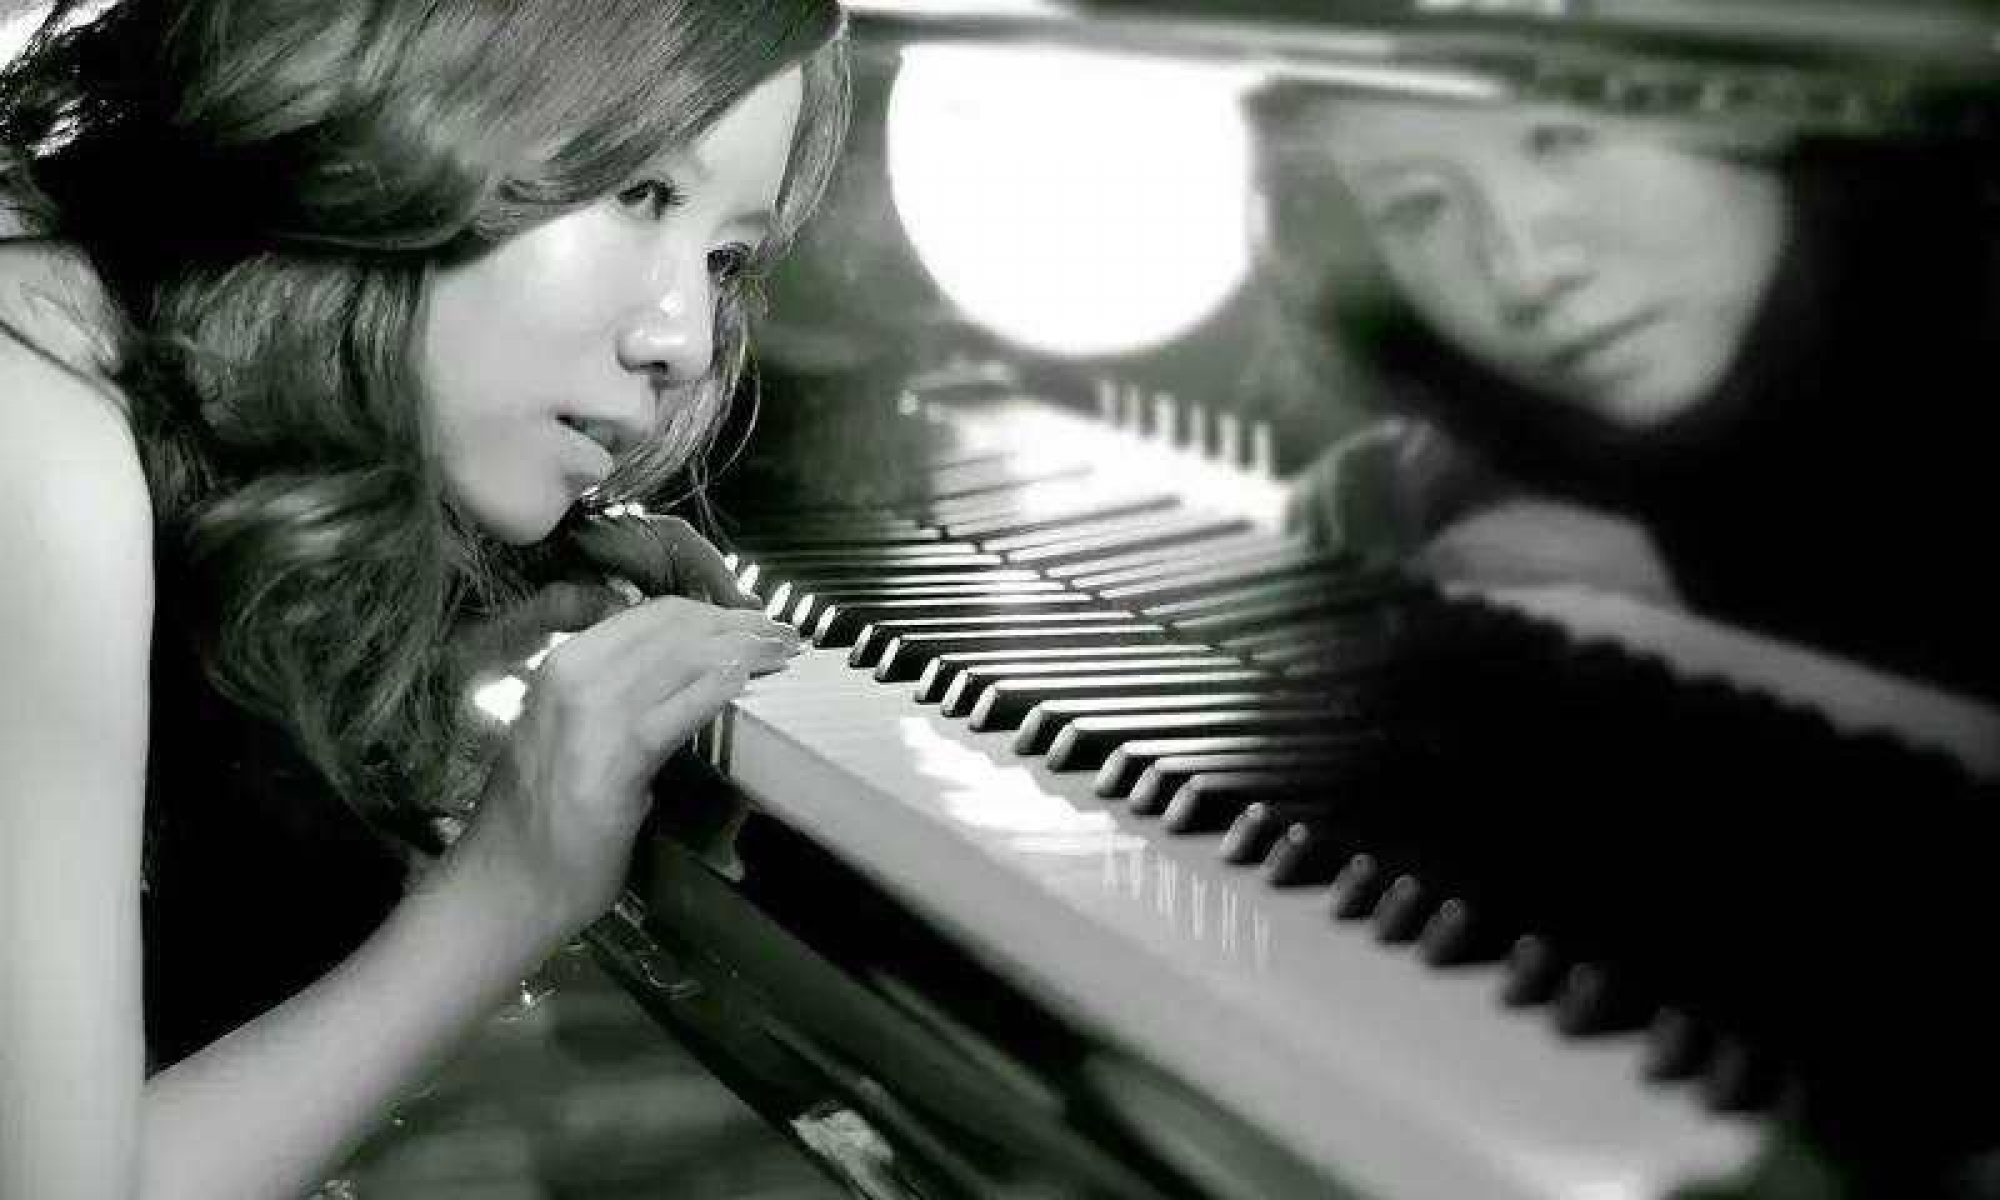 Le Liu at her piano